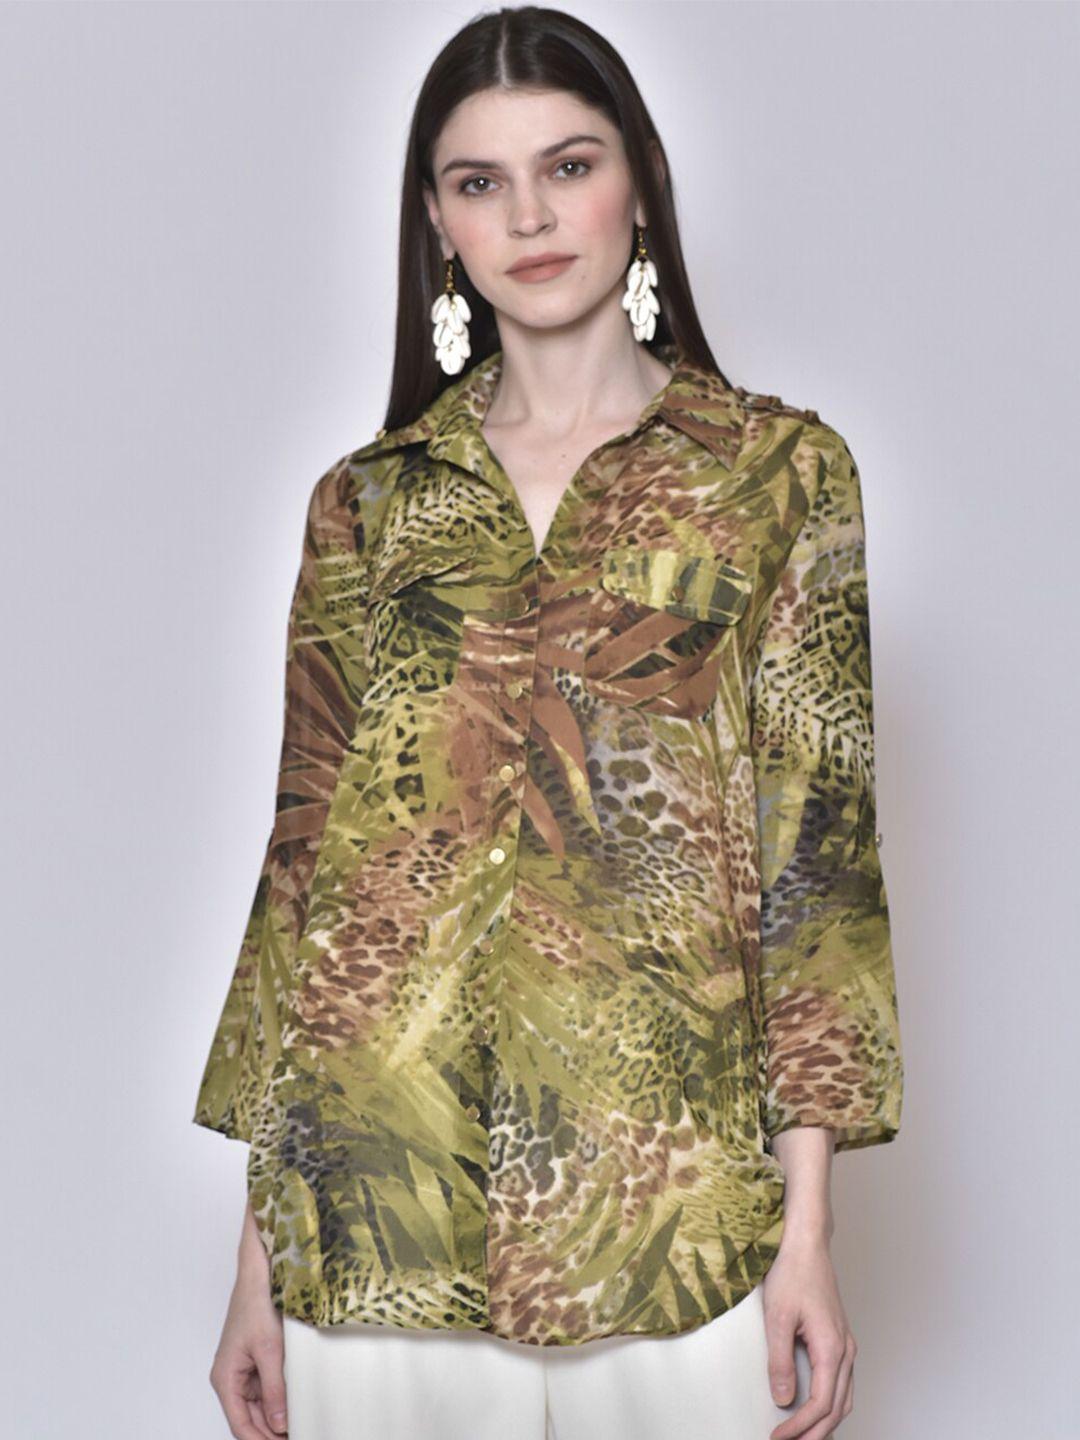 250 designs women olive green animal printed casual shirt